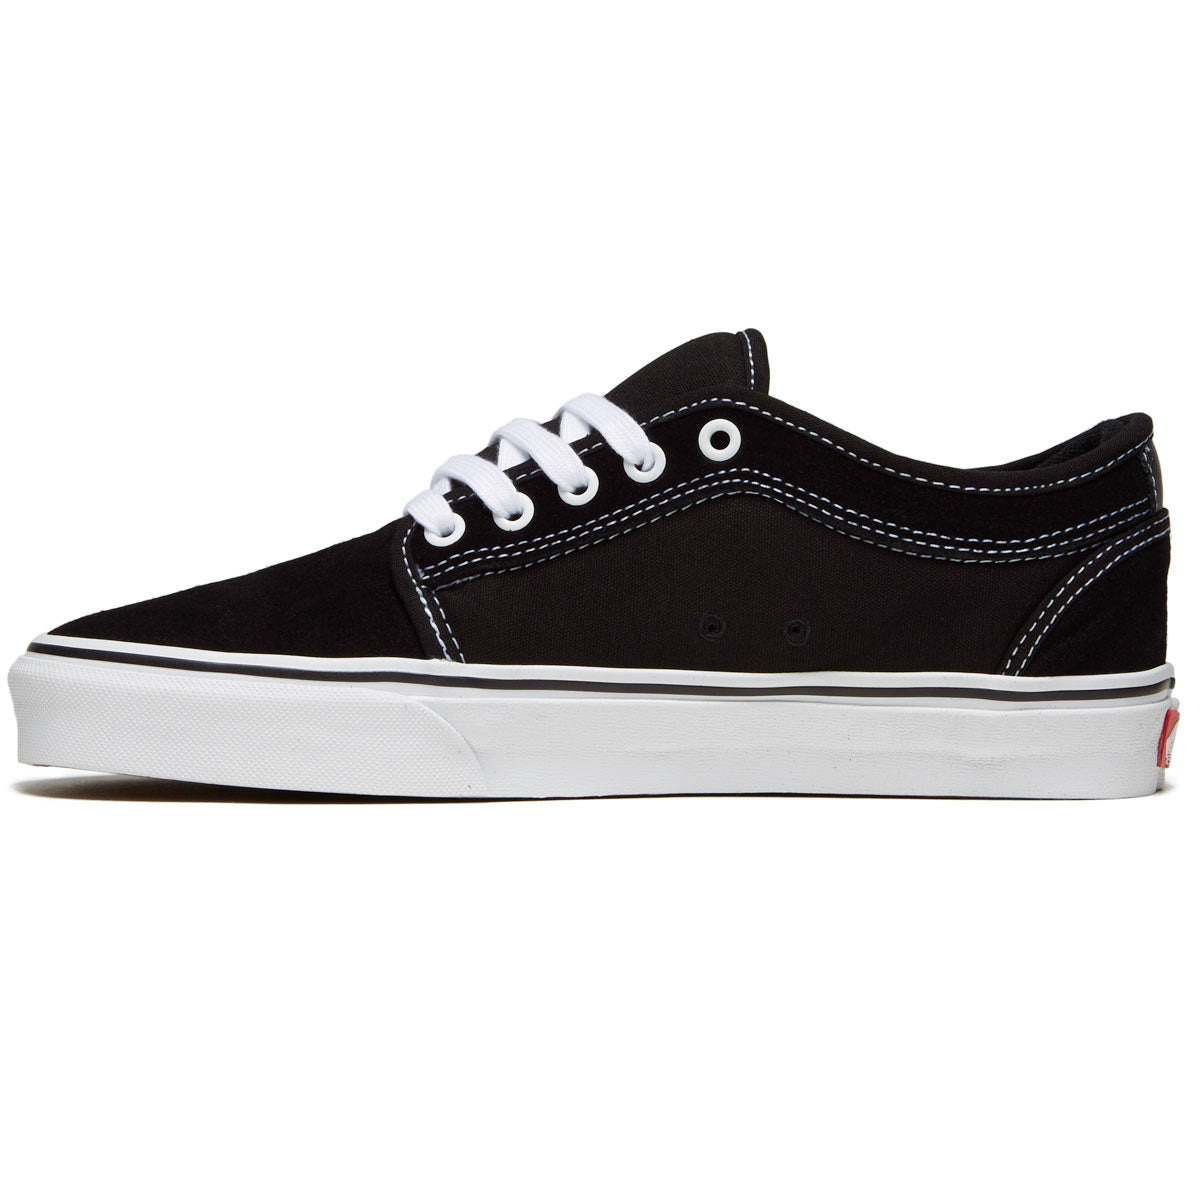 Vans Skate Chukka Low Shoes - Black/White image 2